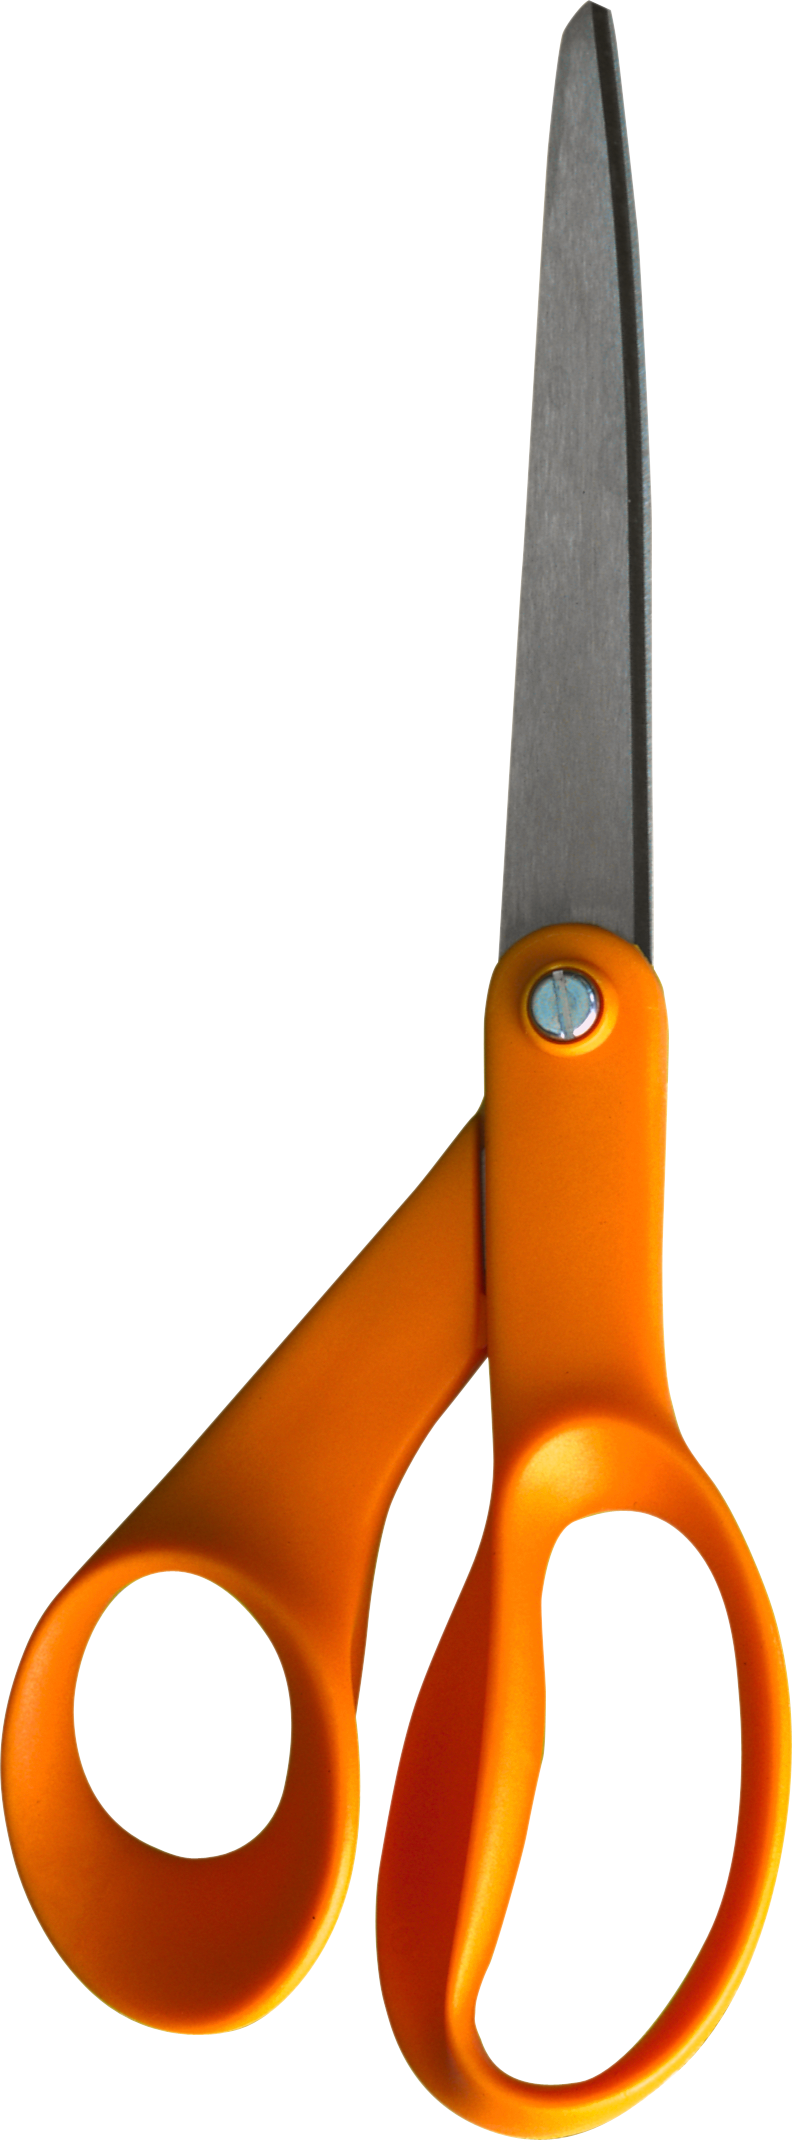 Scissors PNG Image